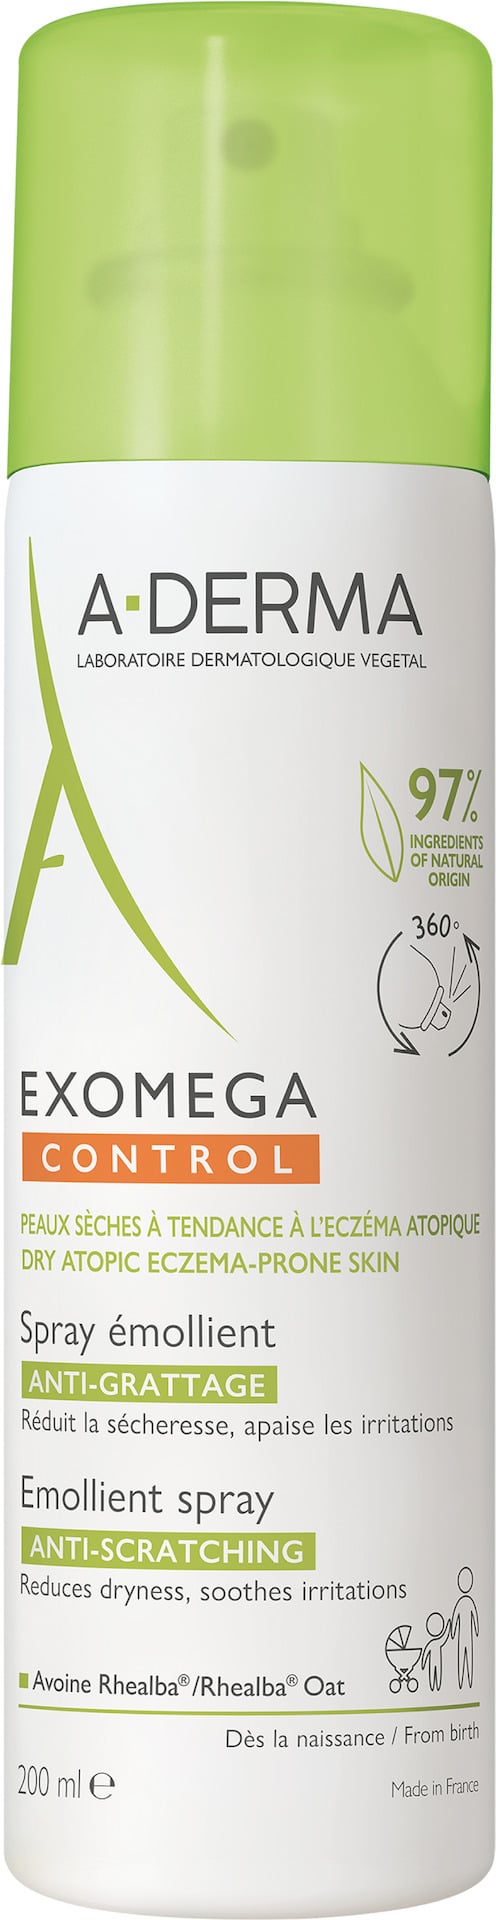 A-derma Exomega CONTROL Spray 200ml